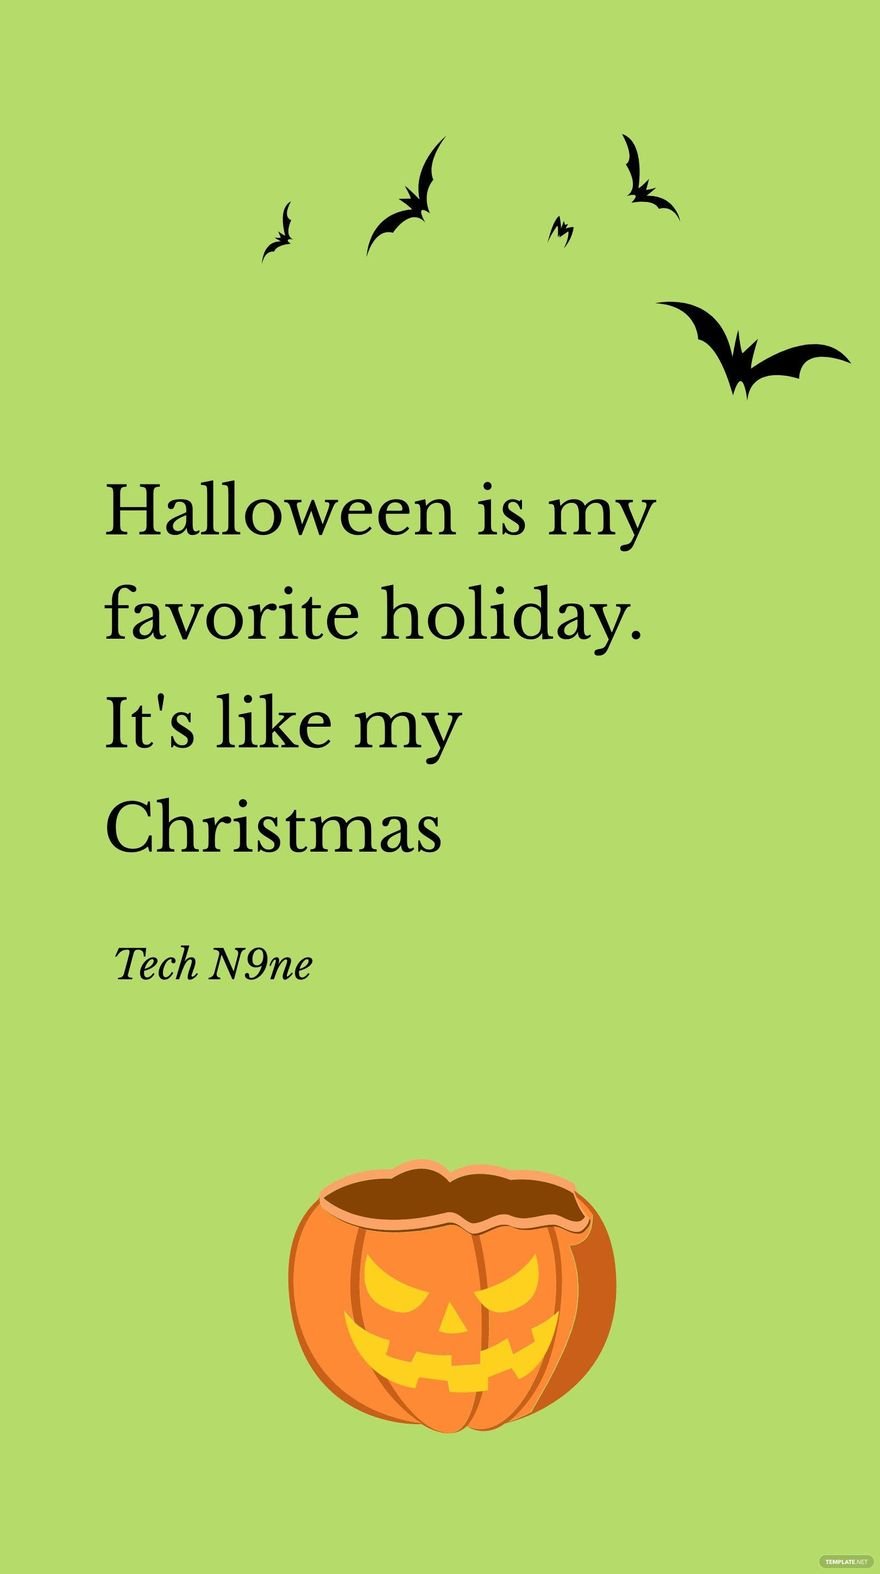 Free Tech N9ne- Halloween is my favorite holiday. It's like my Christmas. in JPG